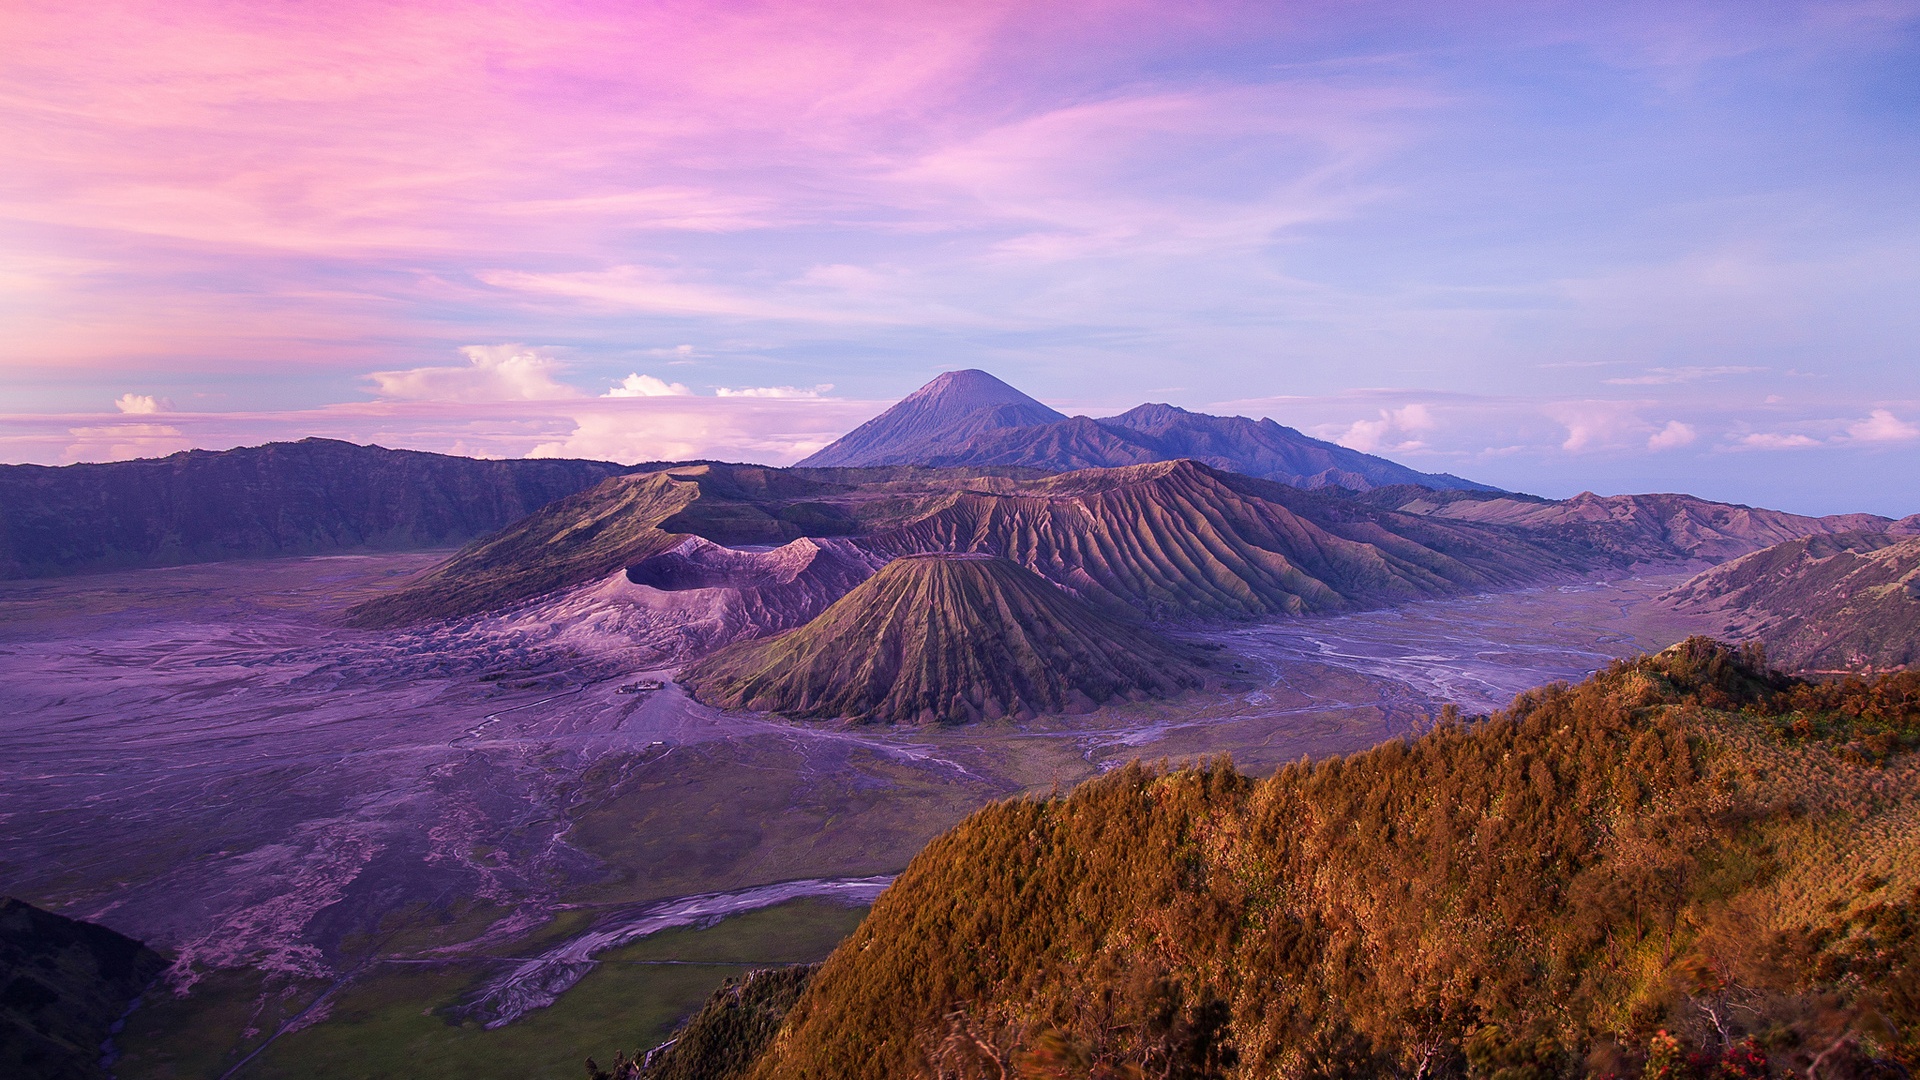  Indonesia  Dusk Landscape  Full HD Desktop Wallpapers  1080p